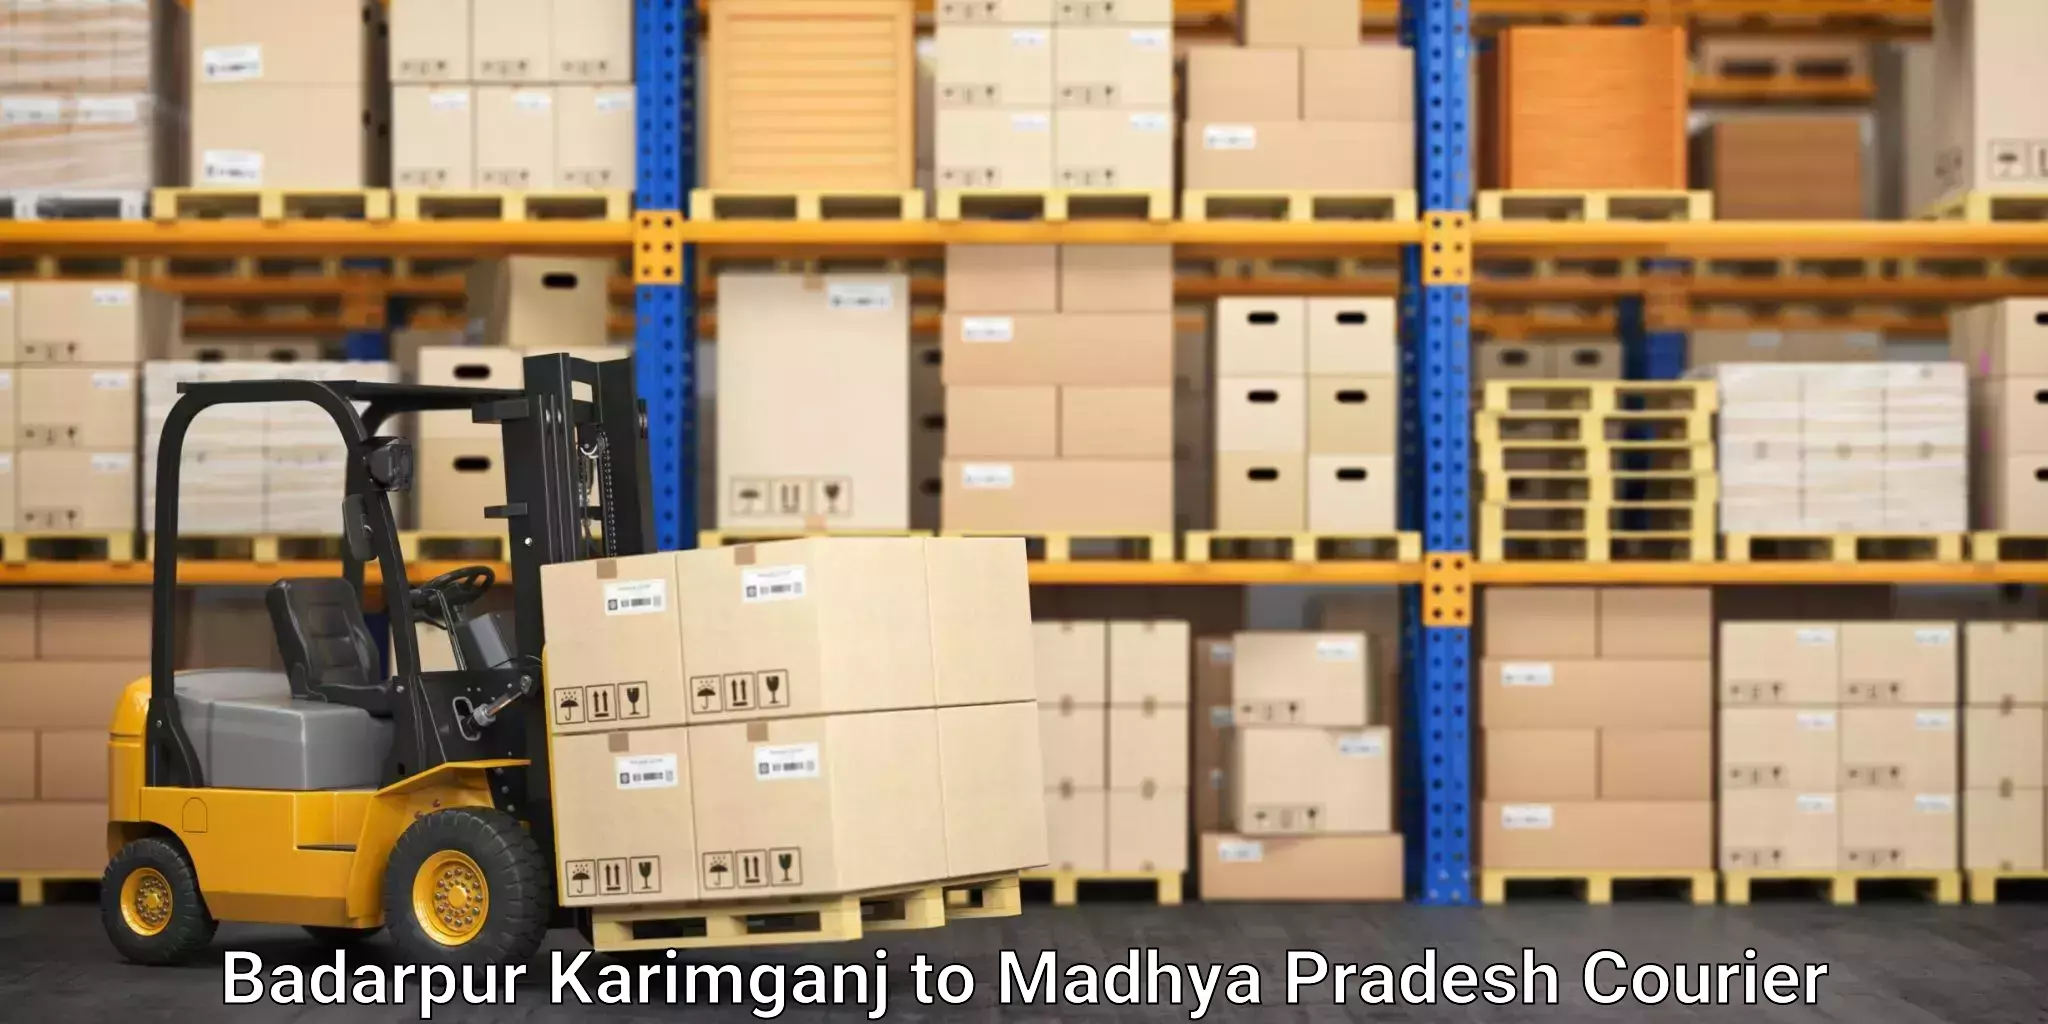 Reliable courier service Badarpur Karimganj to Madhya Pradesh